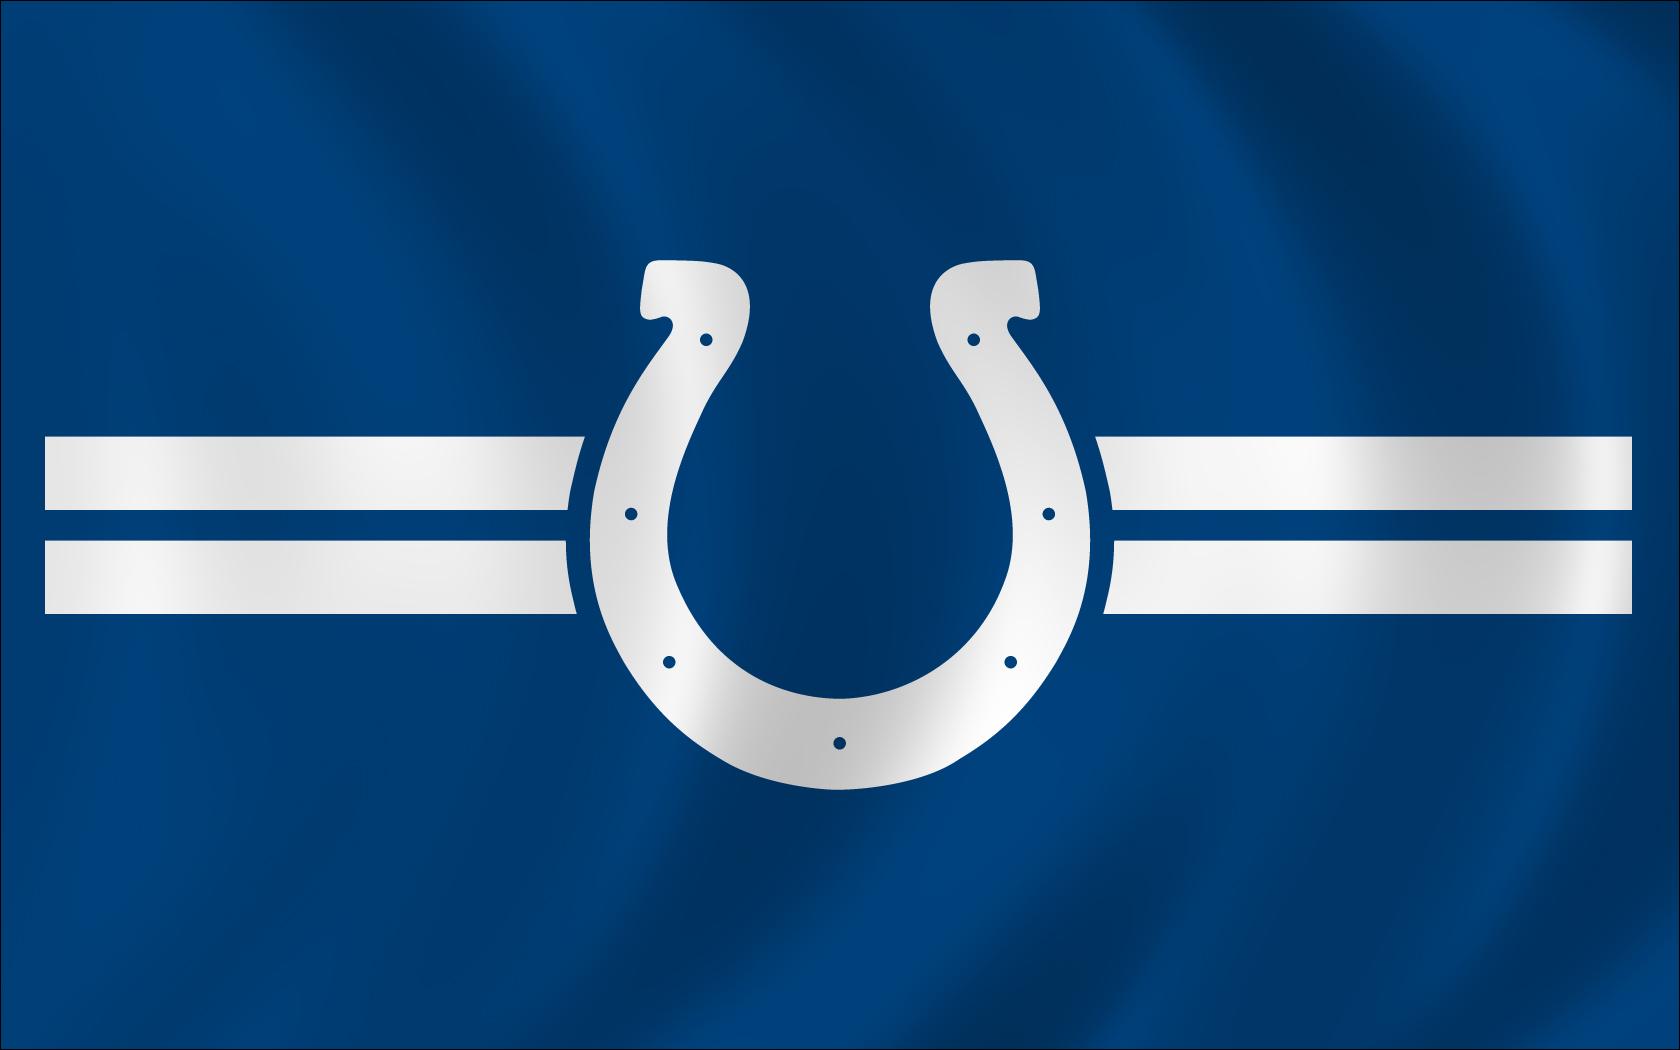 HD Indianapolis Colts Wallpaper